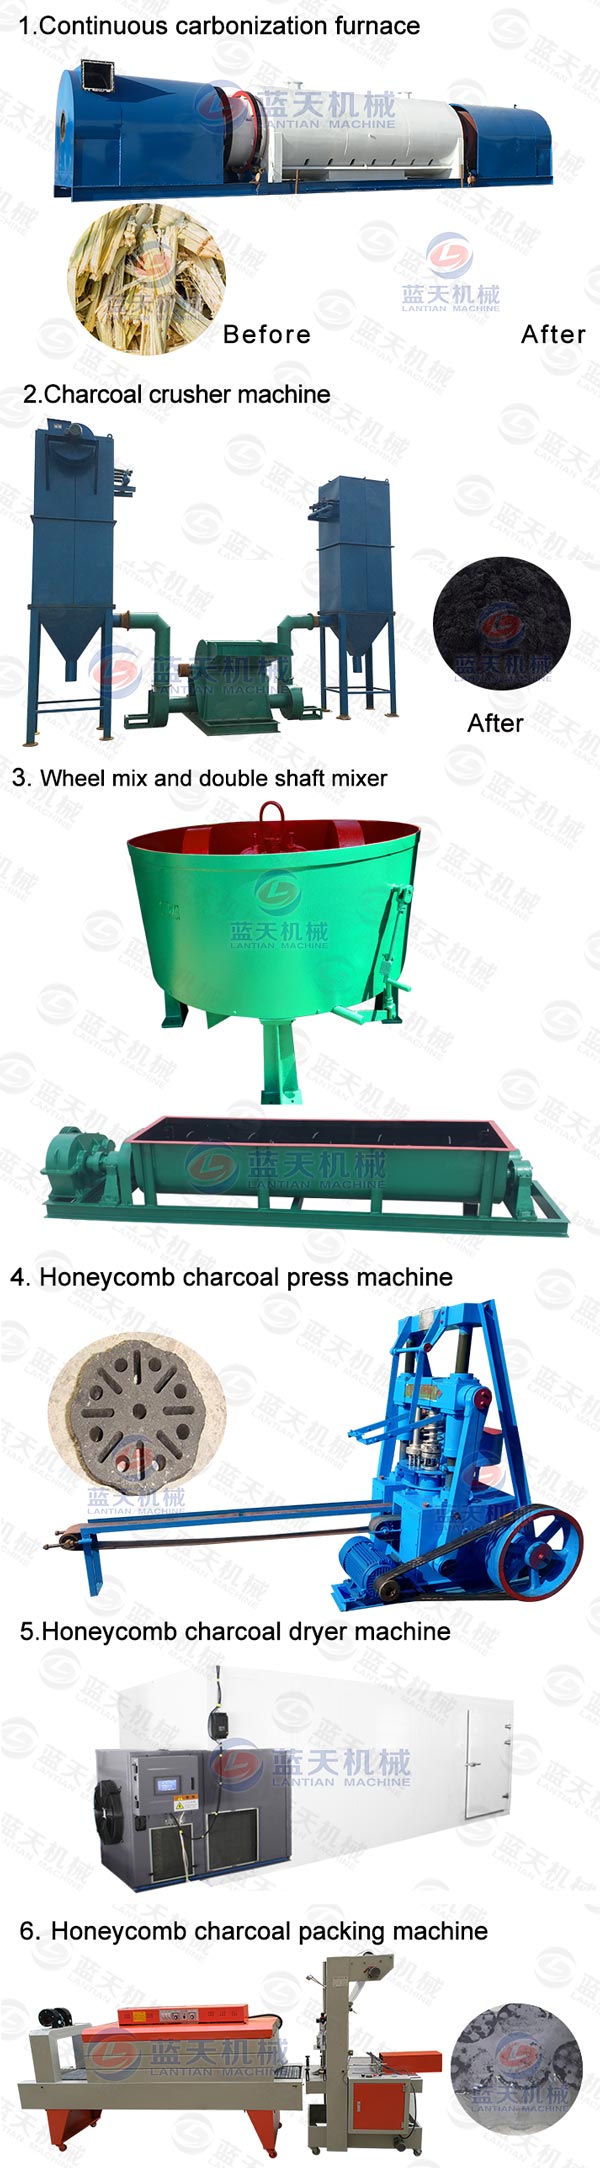 Honeycomb Charcoal Pressing Machine